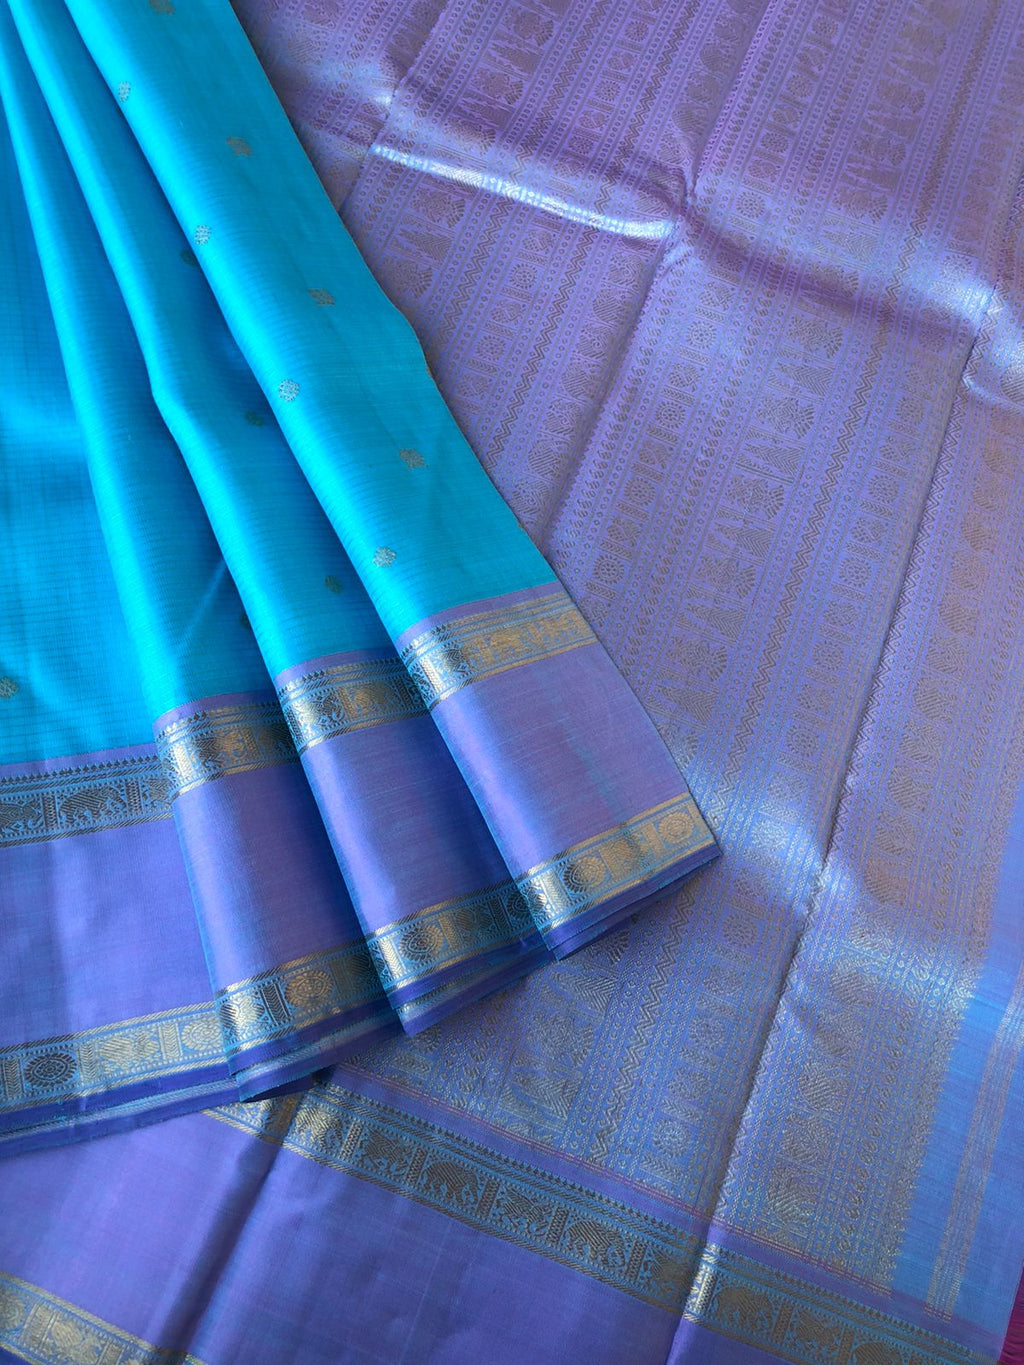 Pastel Ragas on Kanchivaram - gorgeous pastel baby blue and pastel lavender flower Vairaoosi kattam woven body with retta pett woven borders